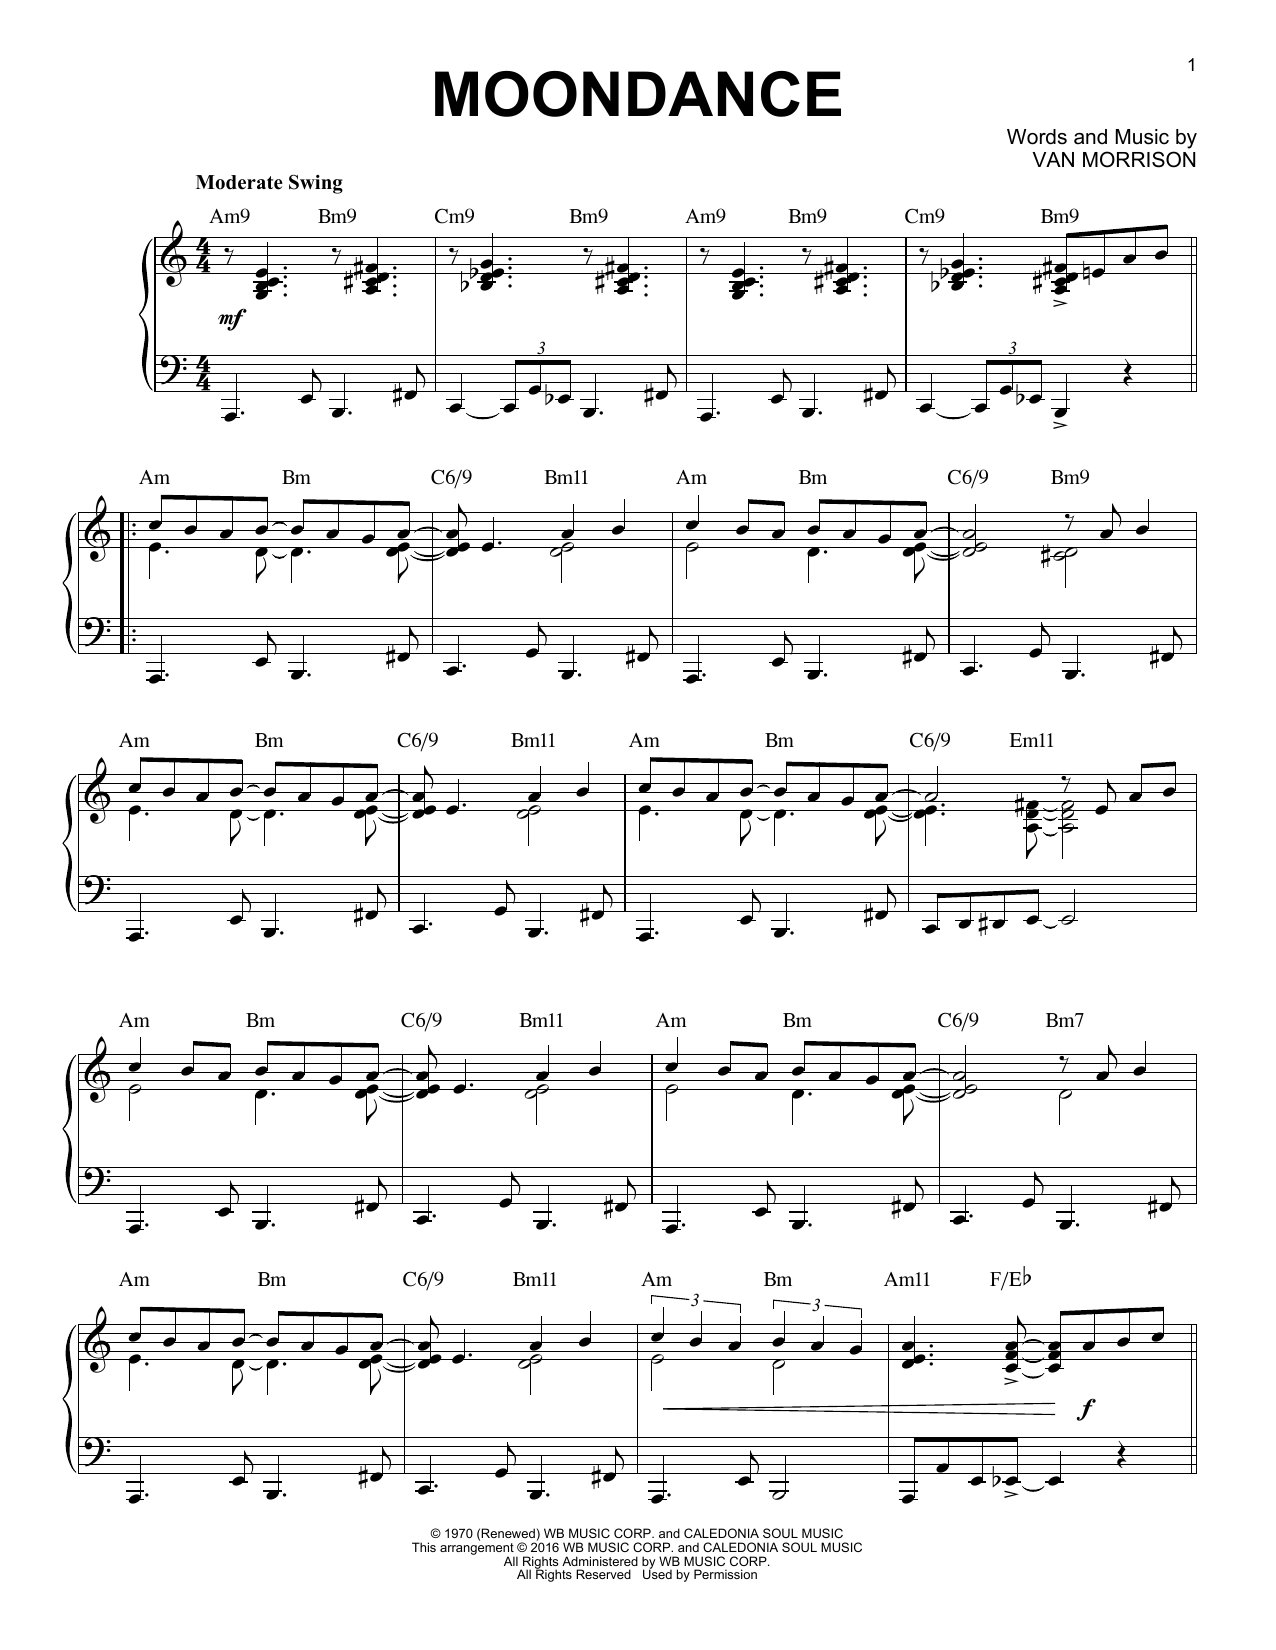 Van Morrison Moondance [Jazz version] (arr. Brent Edstrom) Sheet Music Notes & Chords for Piano - Download or Print PDF